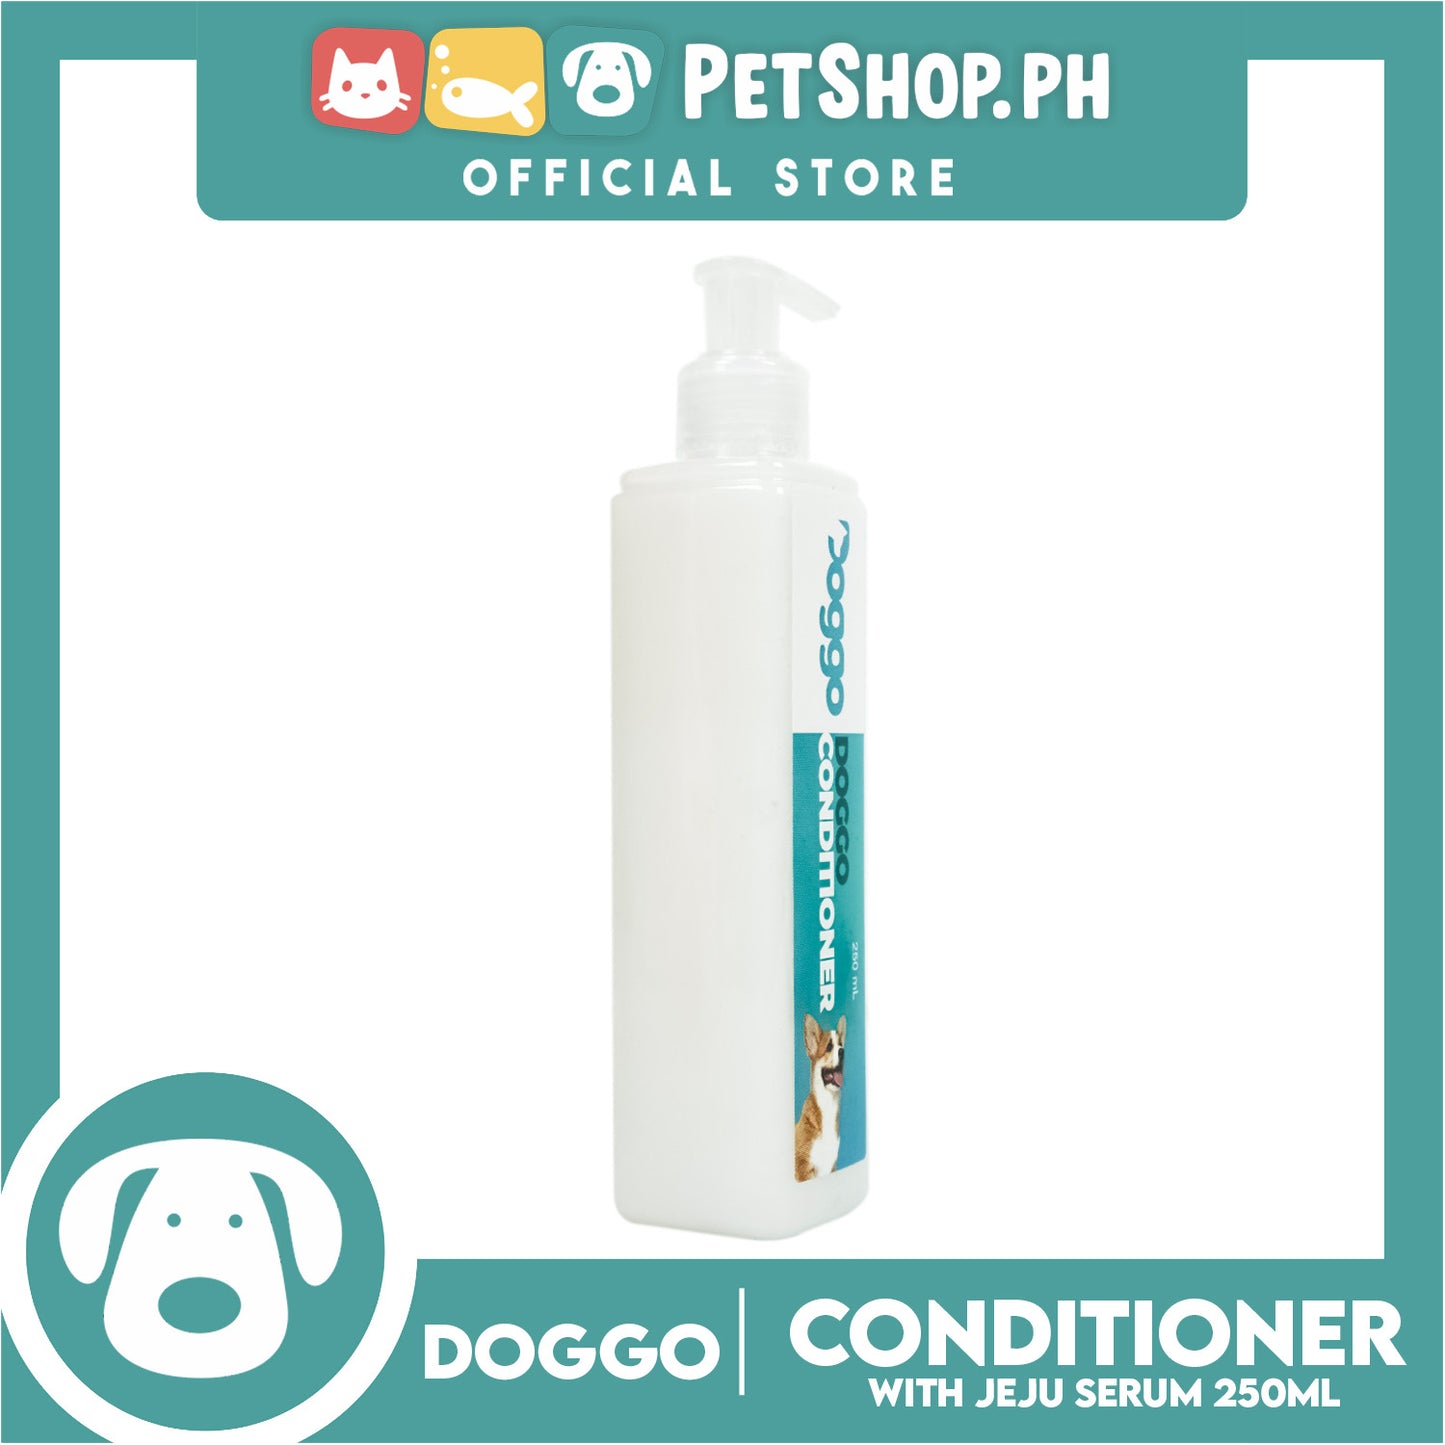 Doggo Dog Hair Conditioner with Jeju Serum 250ml